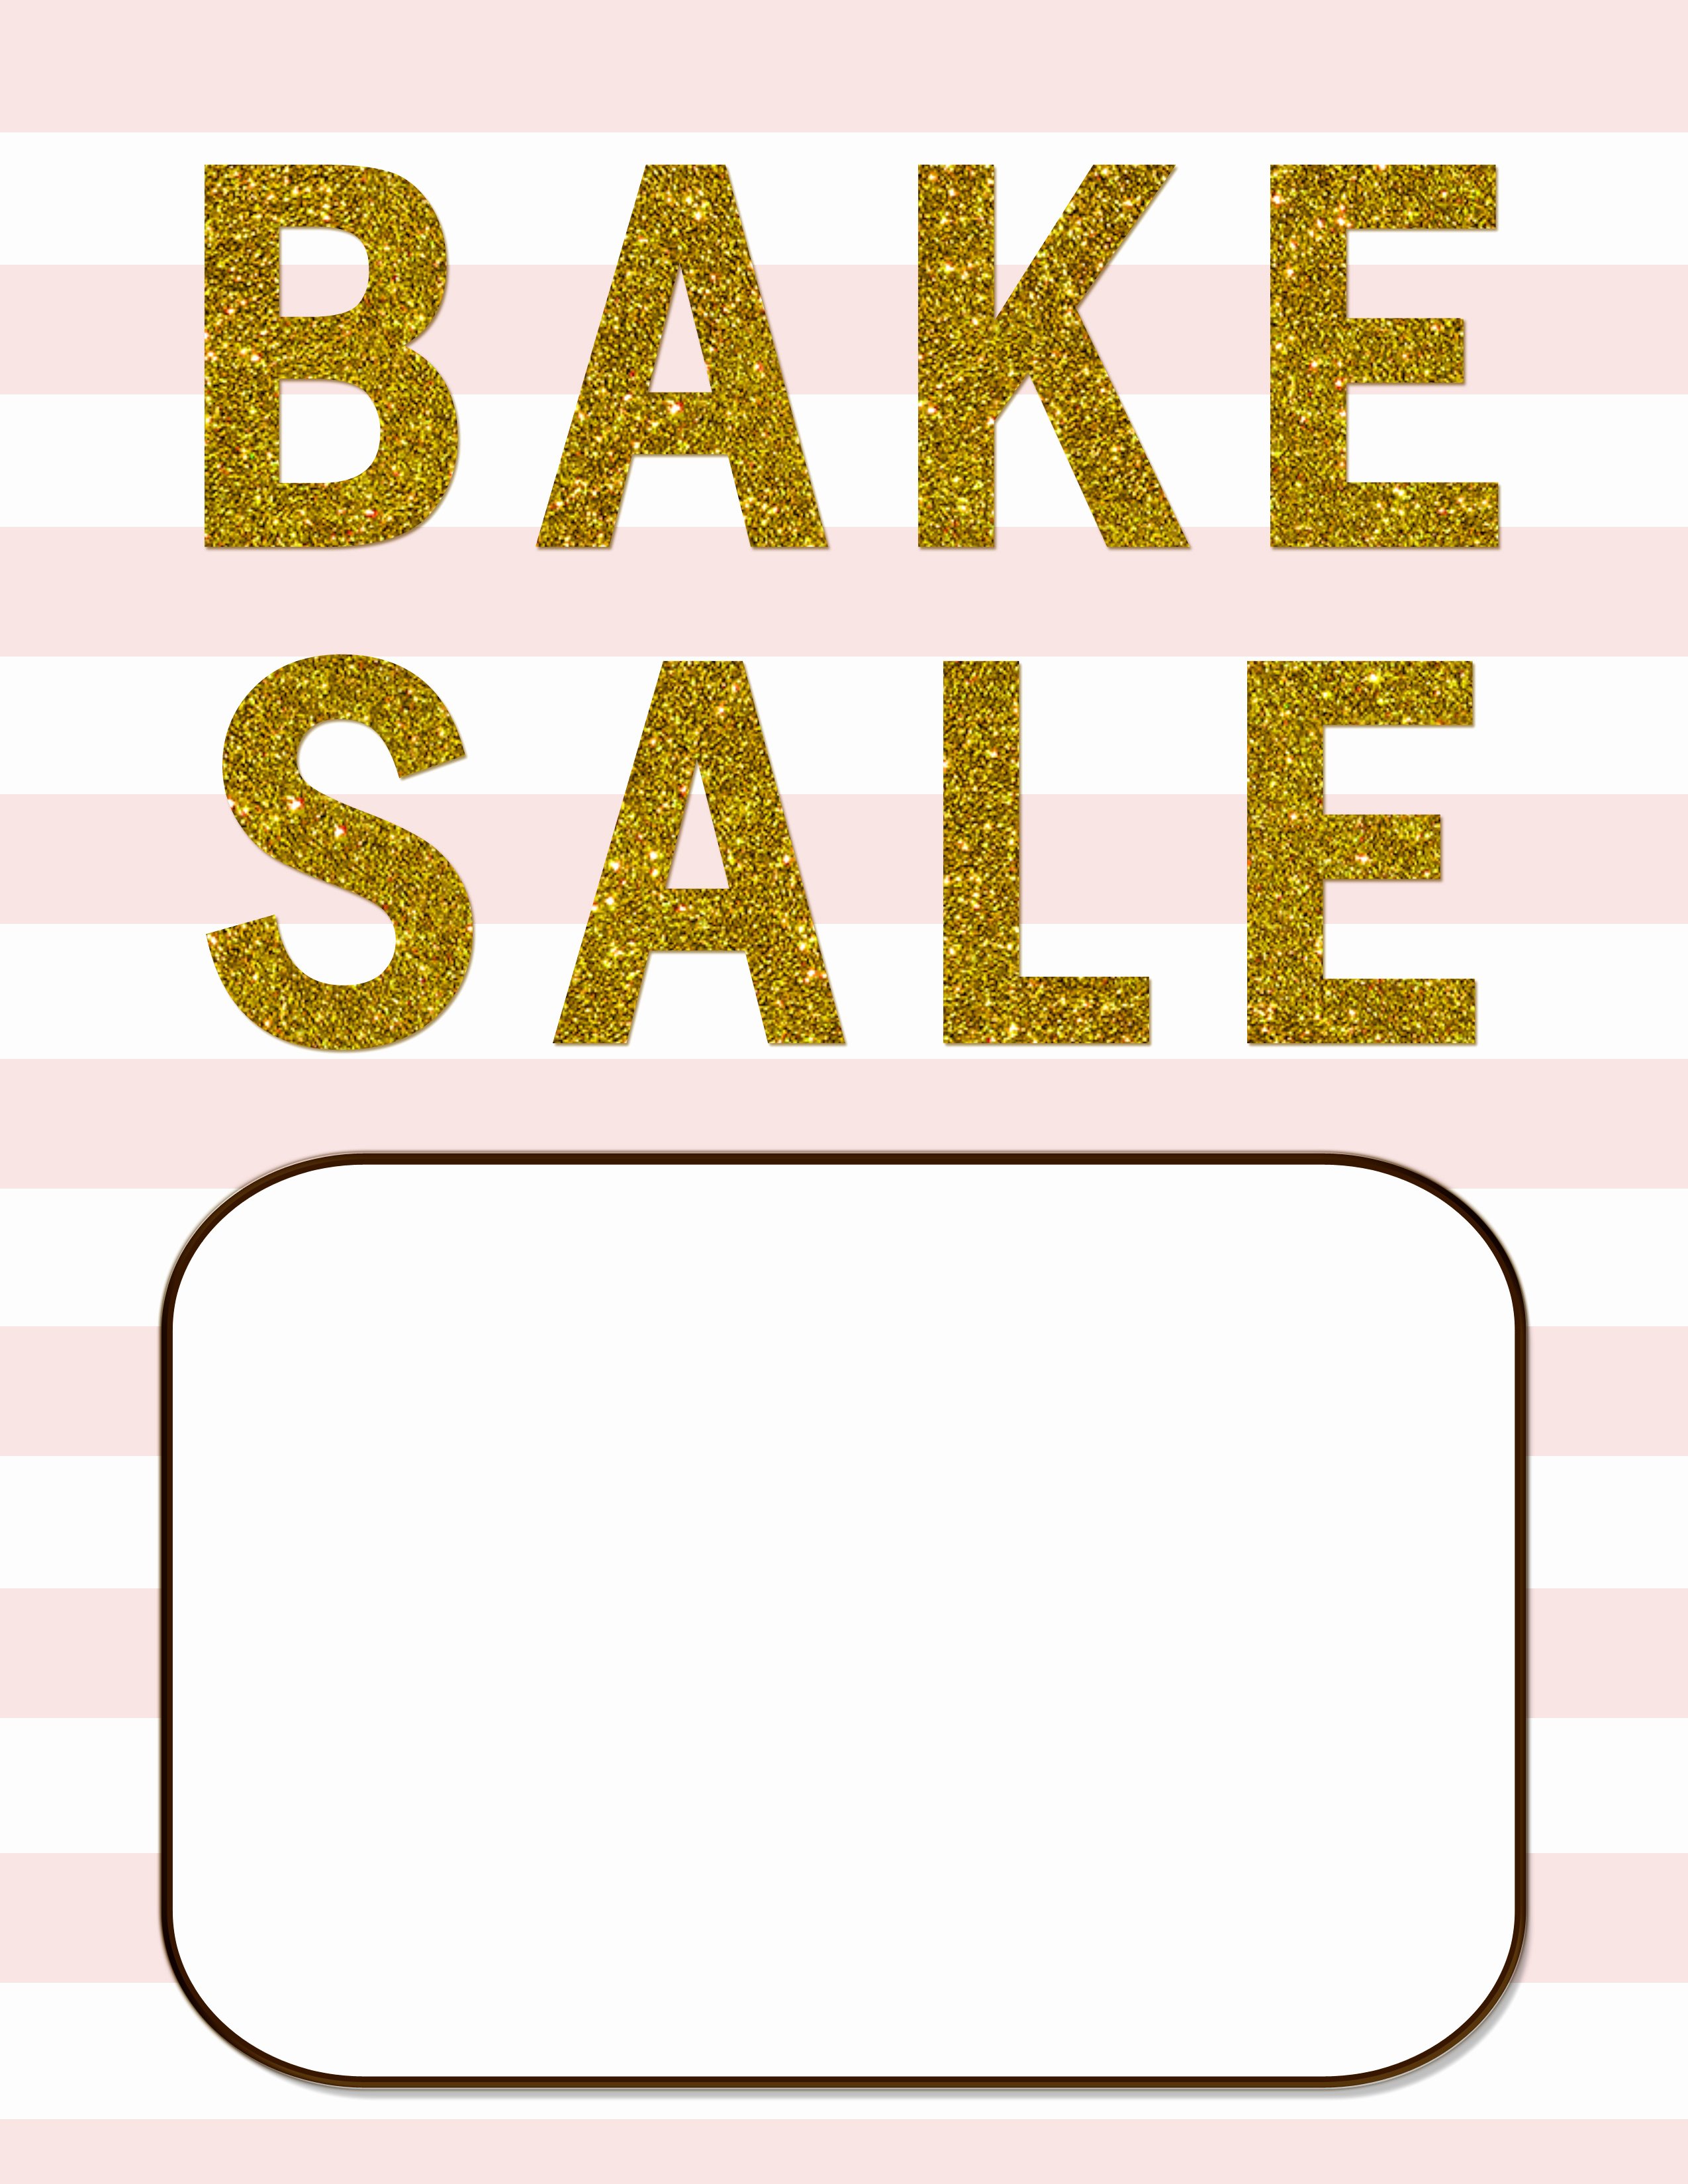 Bake Sale Flyer Template Free New Bake Sale Flyers – Free Flyer Designs